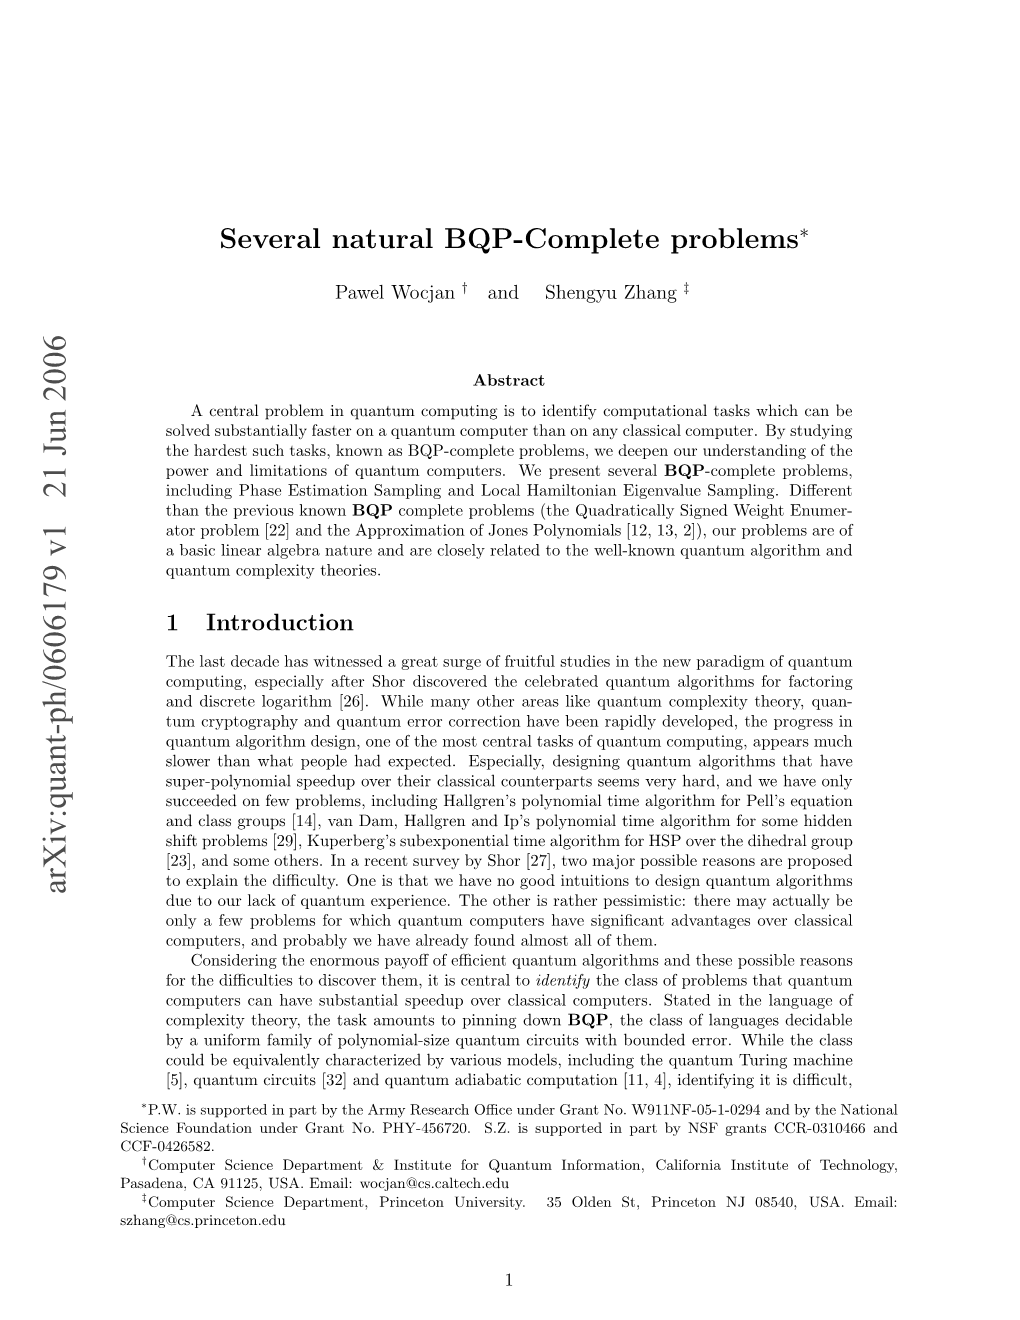 Several Natural BQP-Complete Problems